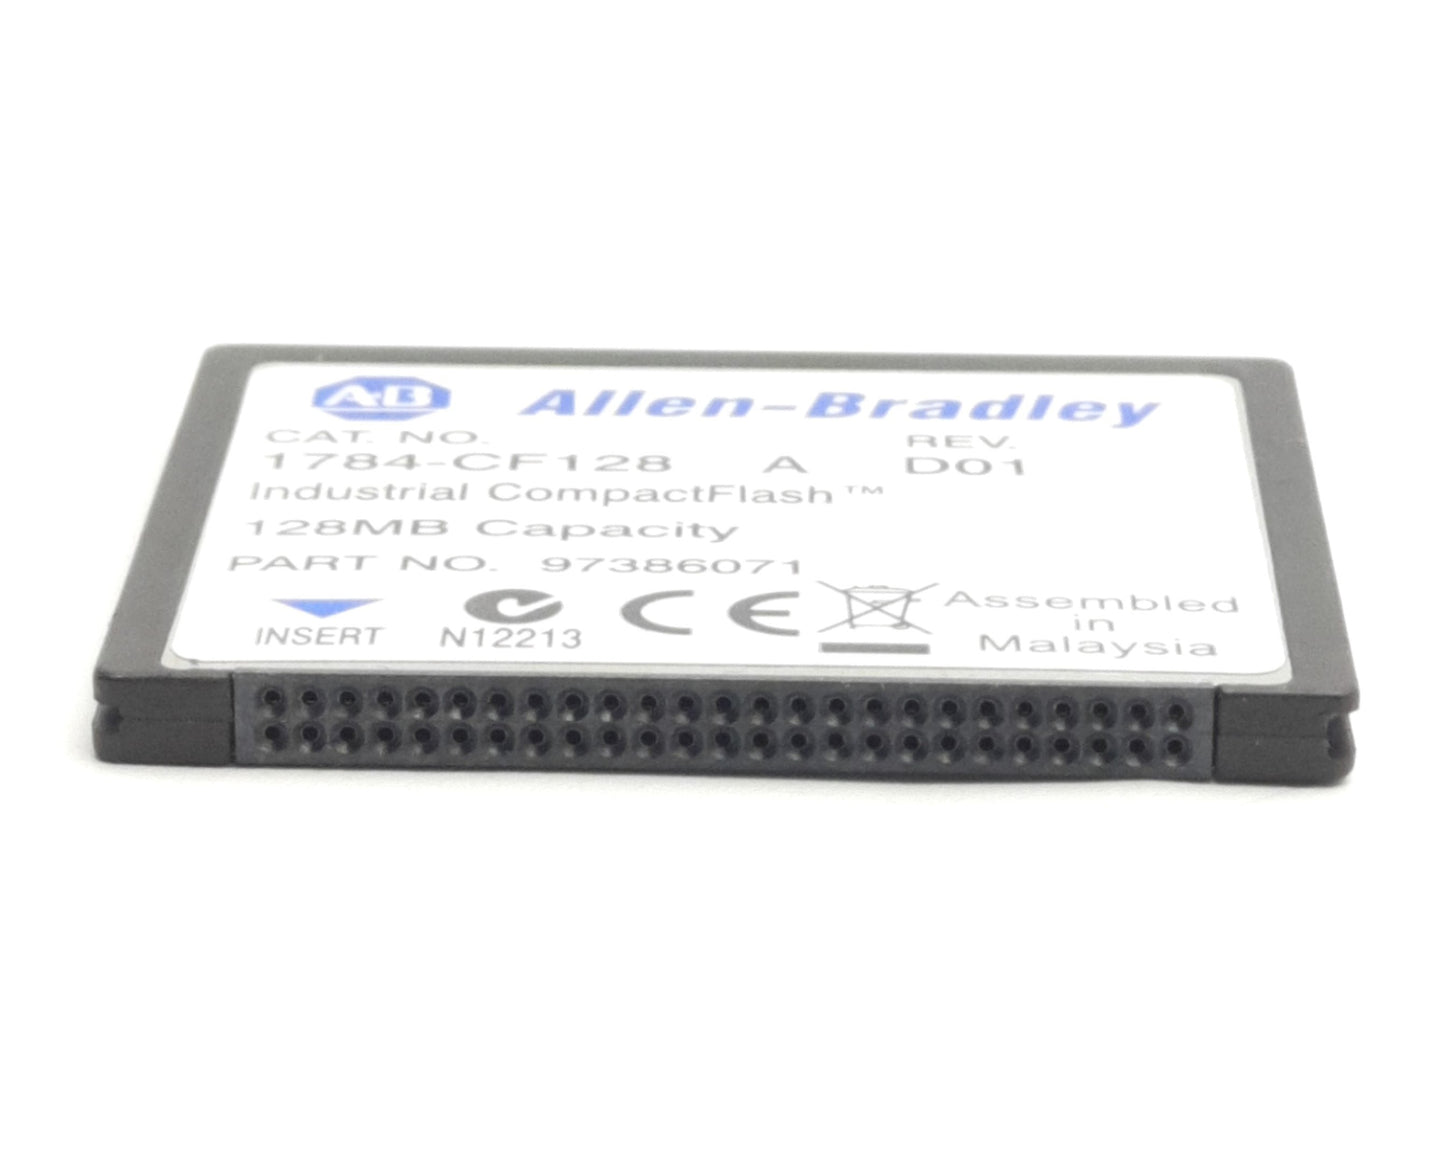 Allen Bradley 1784-CF128 Industrial Compact Flash Memory Module, 128MB Capacity